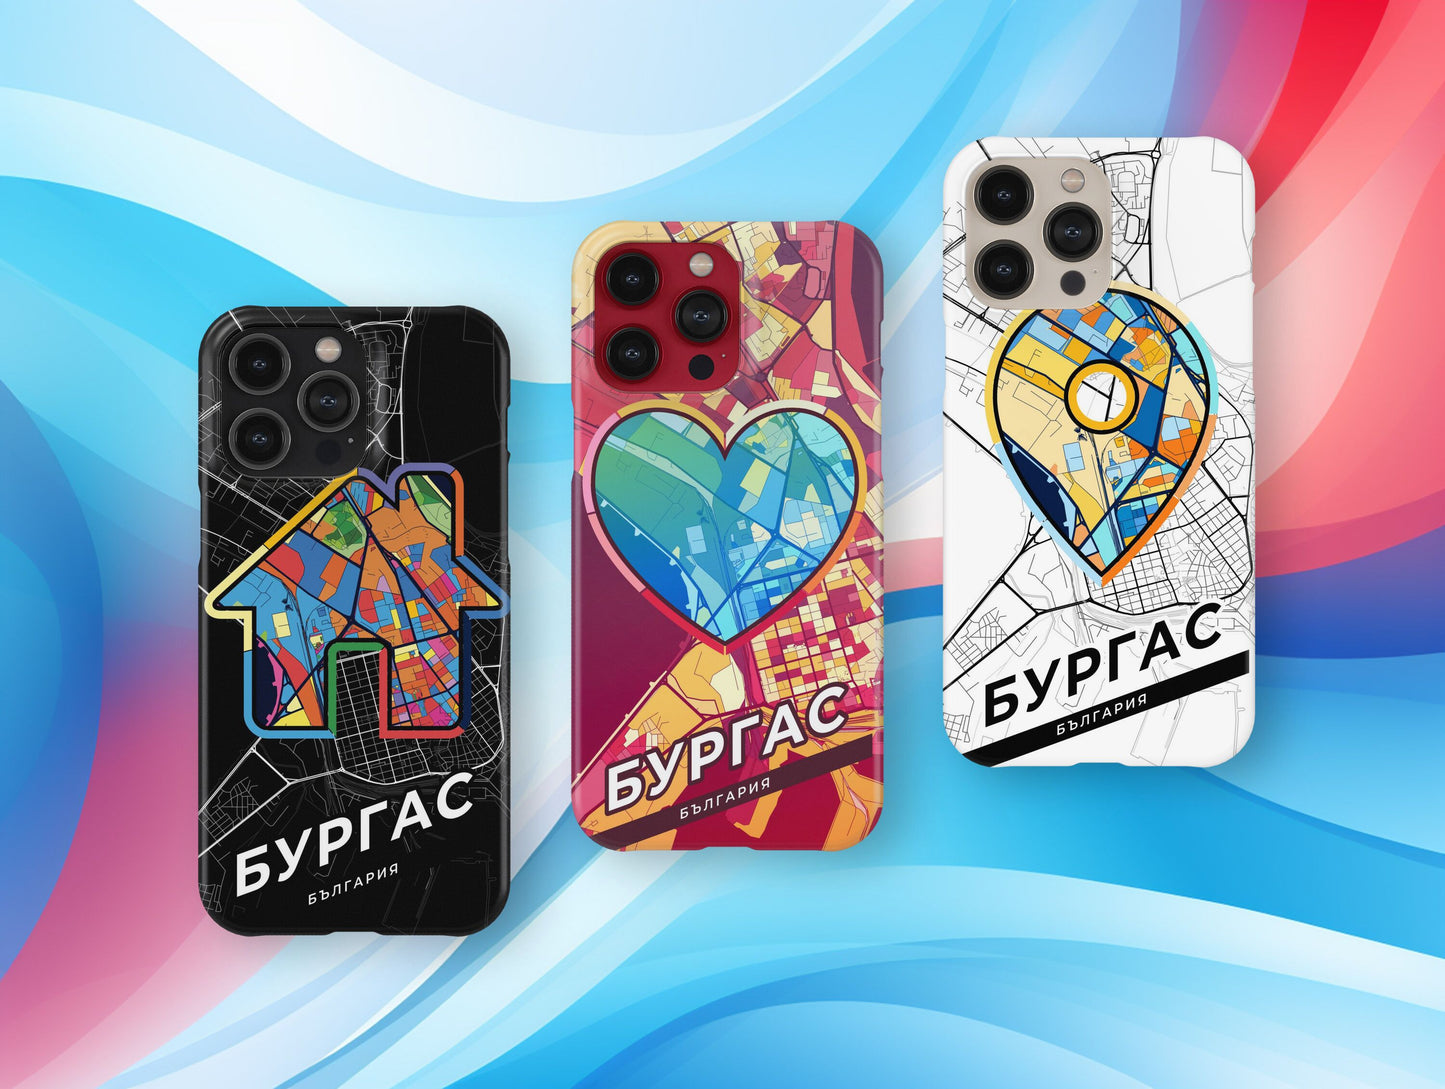 Бургас България slim phone case with colorful icon